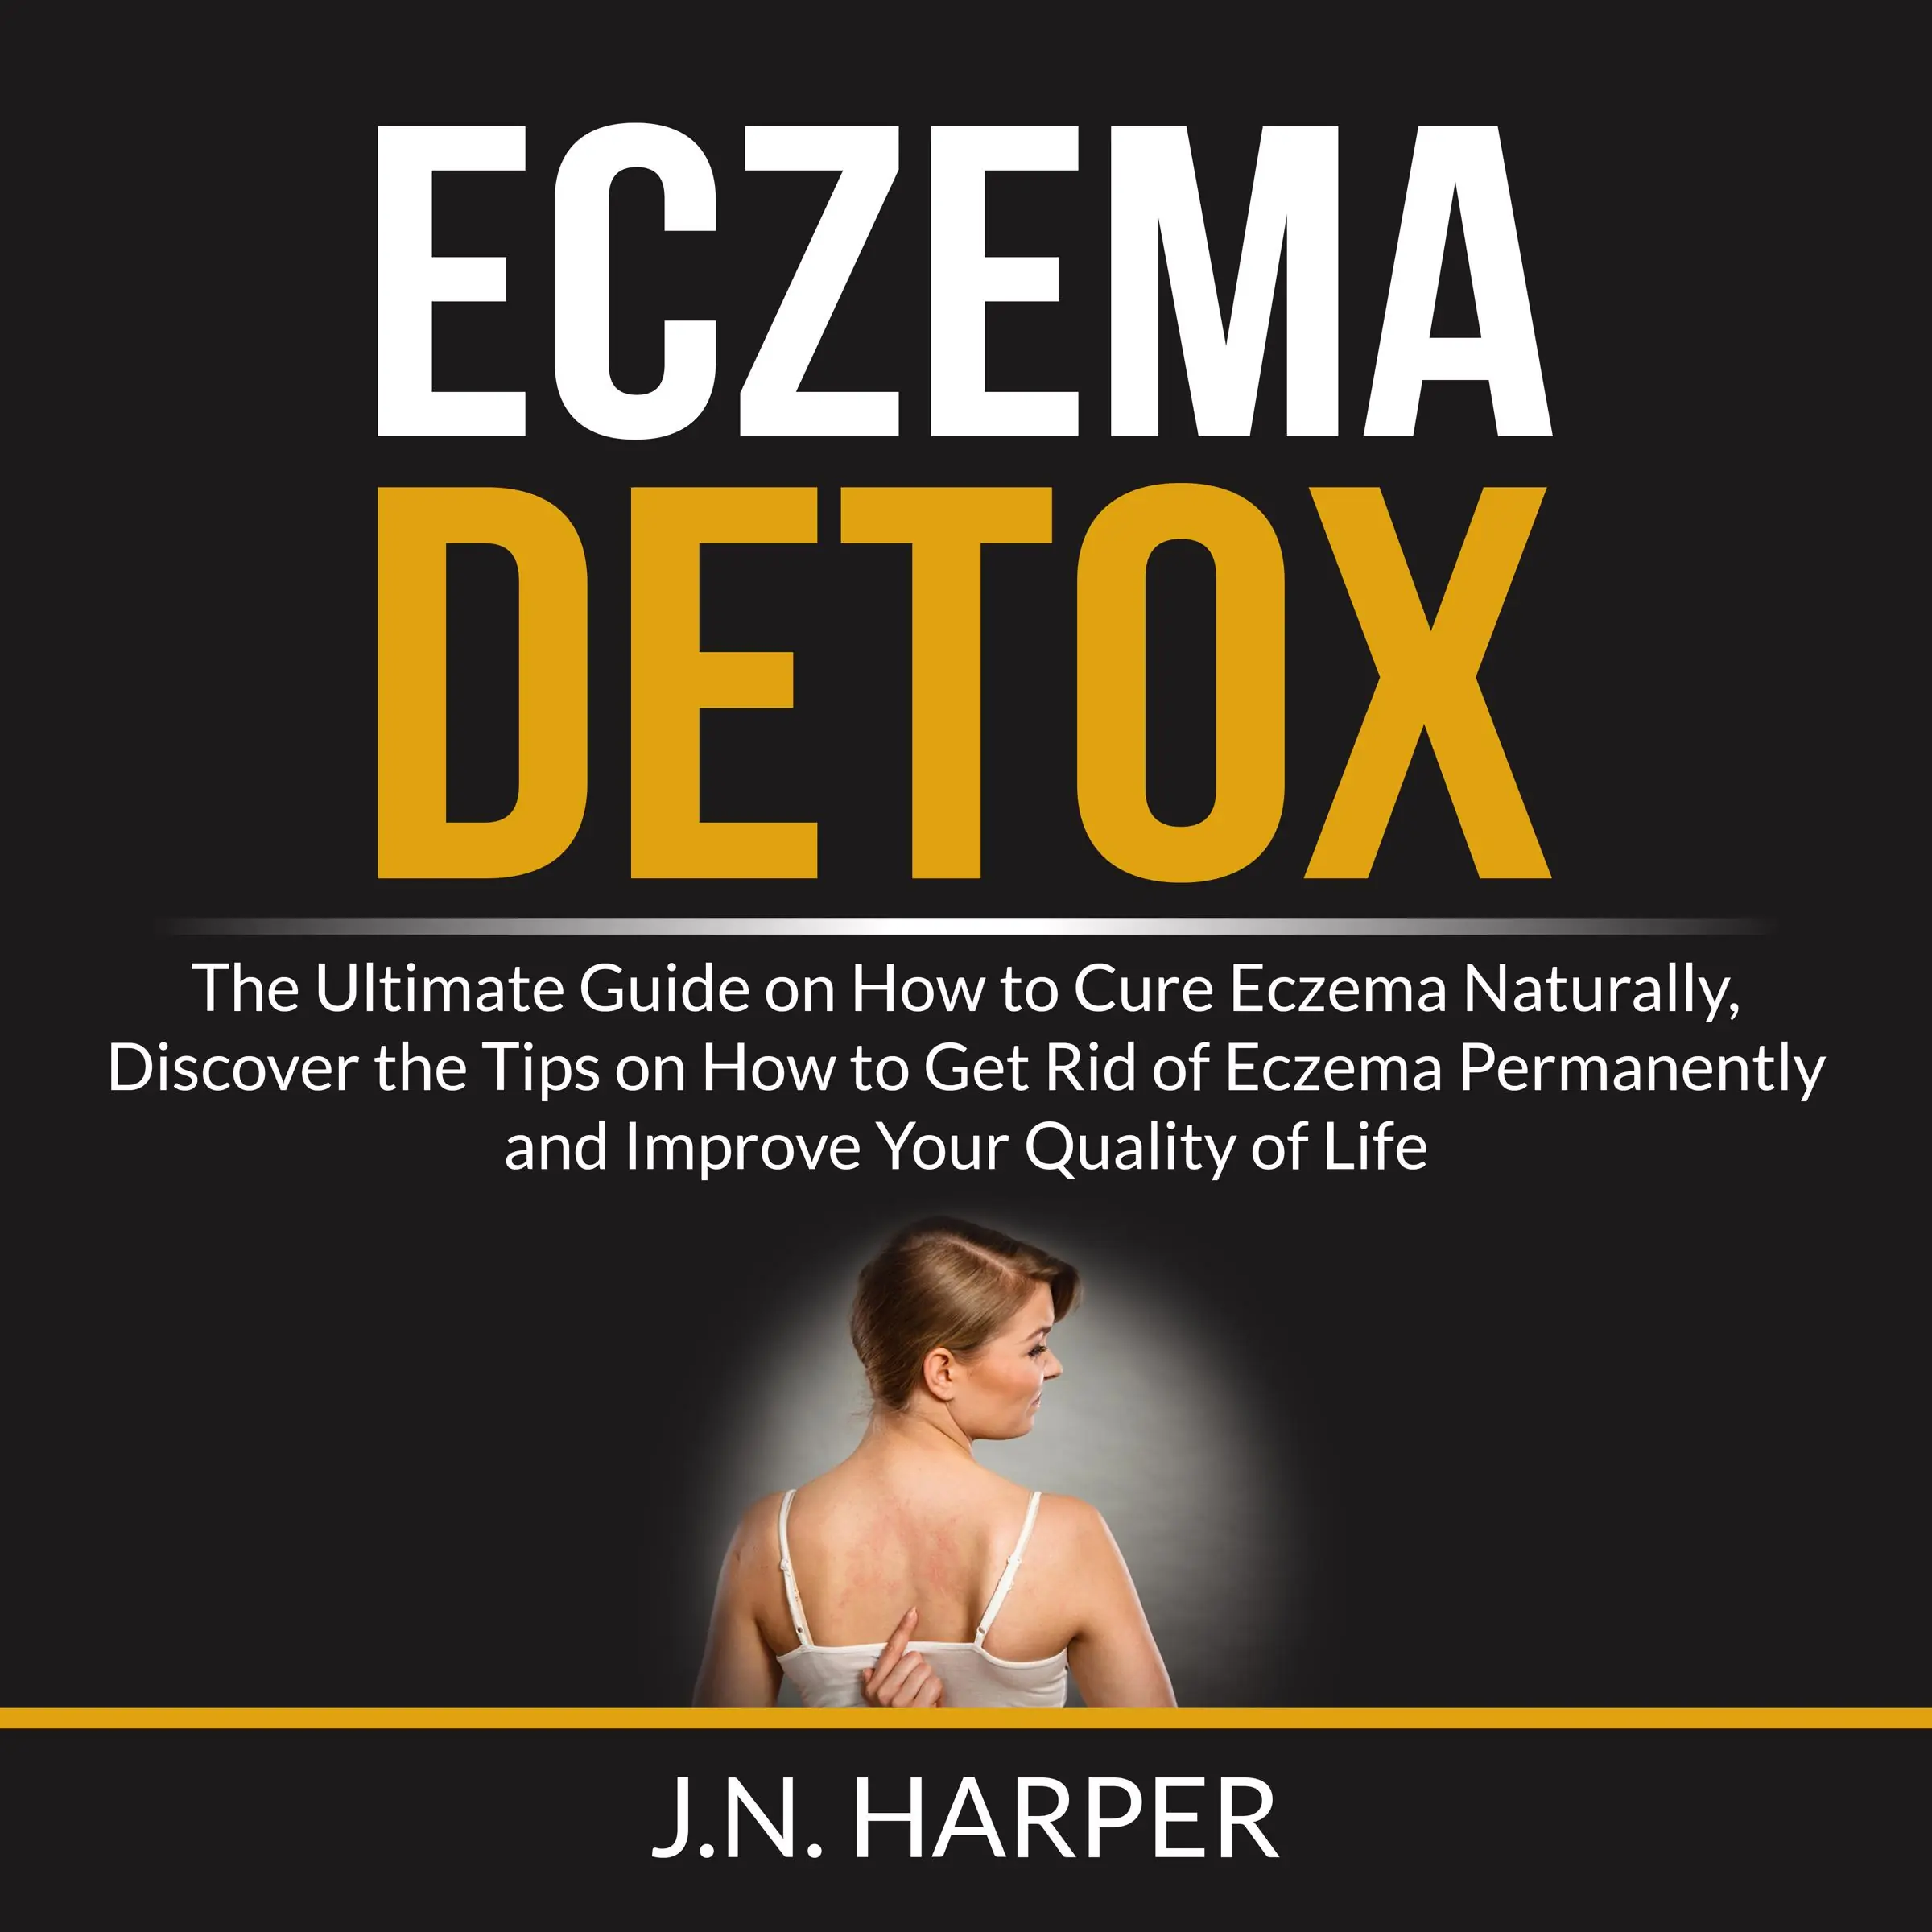 Eczema Detox Audiobook by J.N Harper